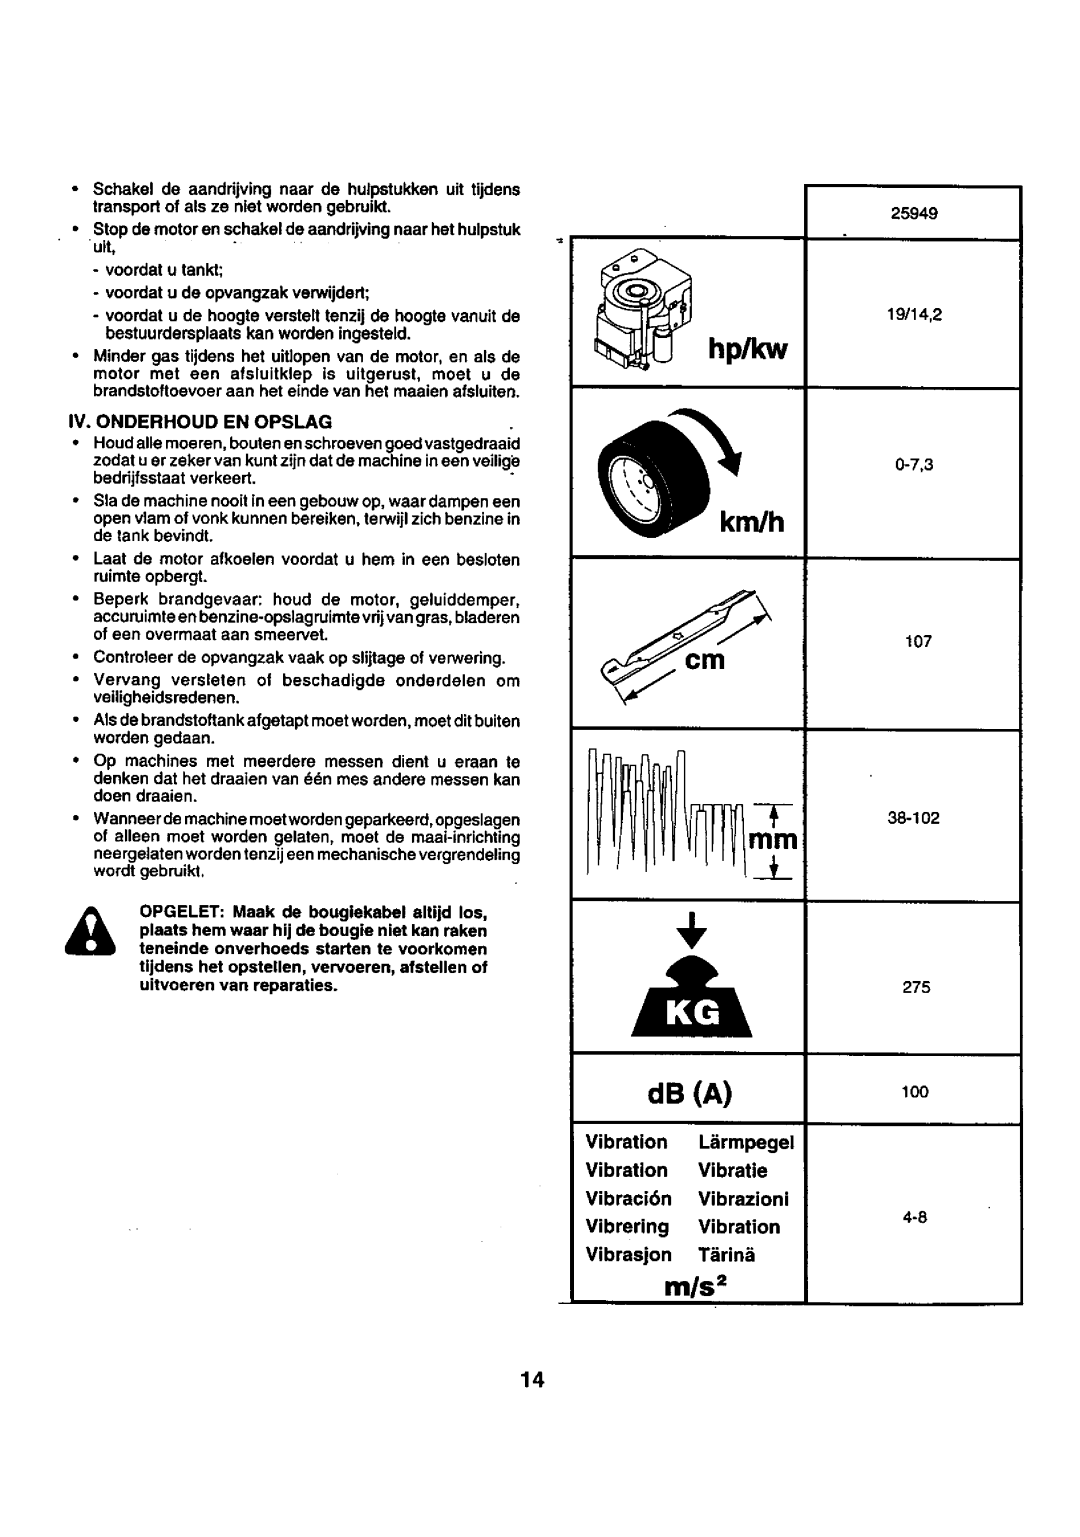 Craftsman 25949 instruction manual m/s =, dB A 